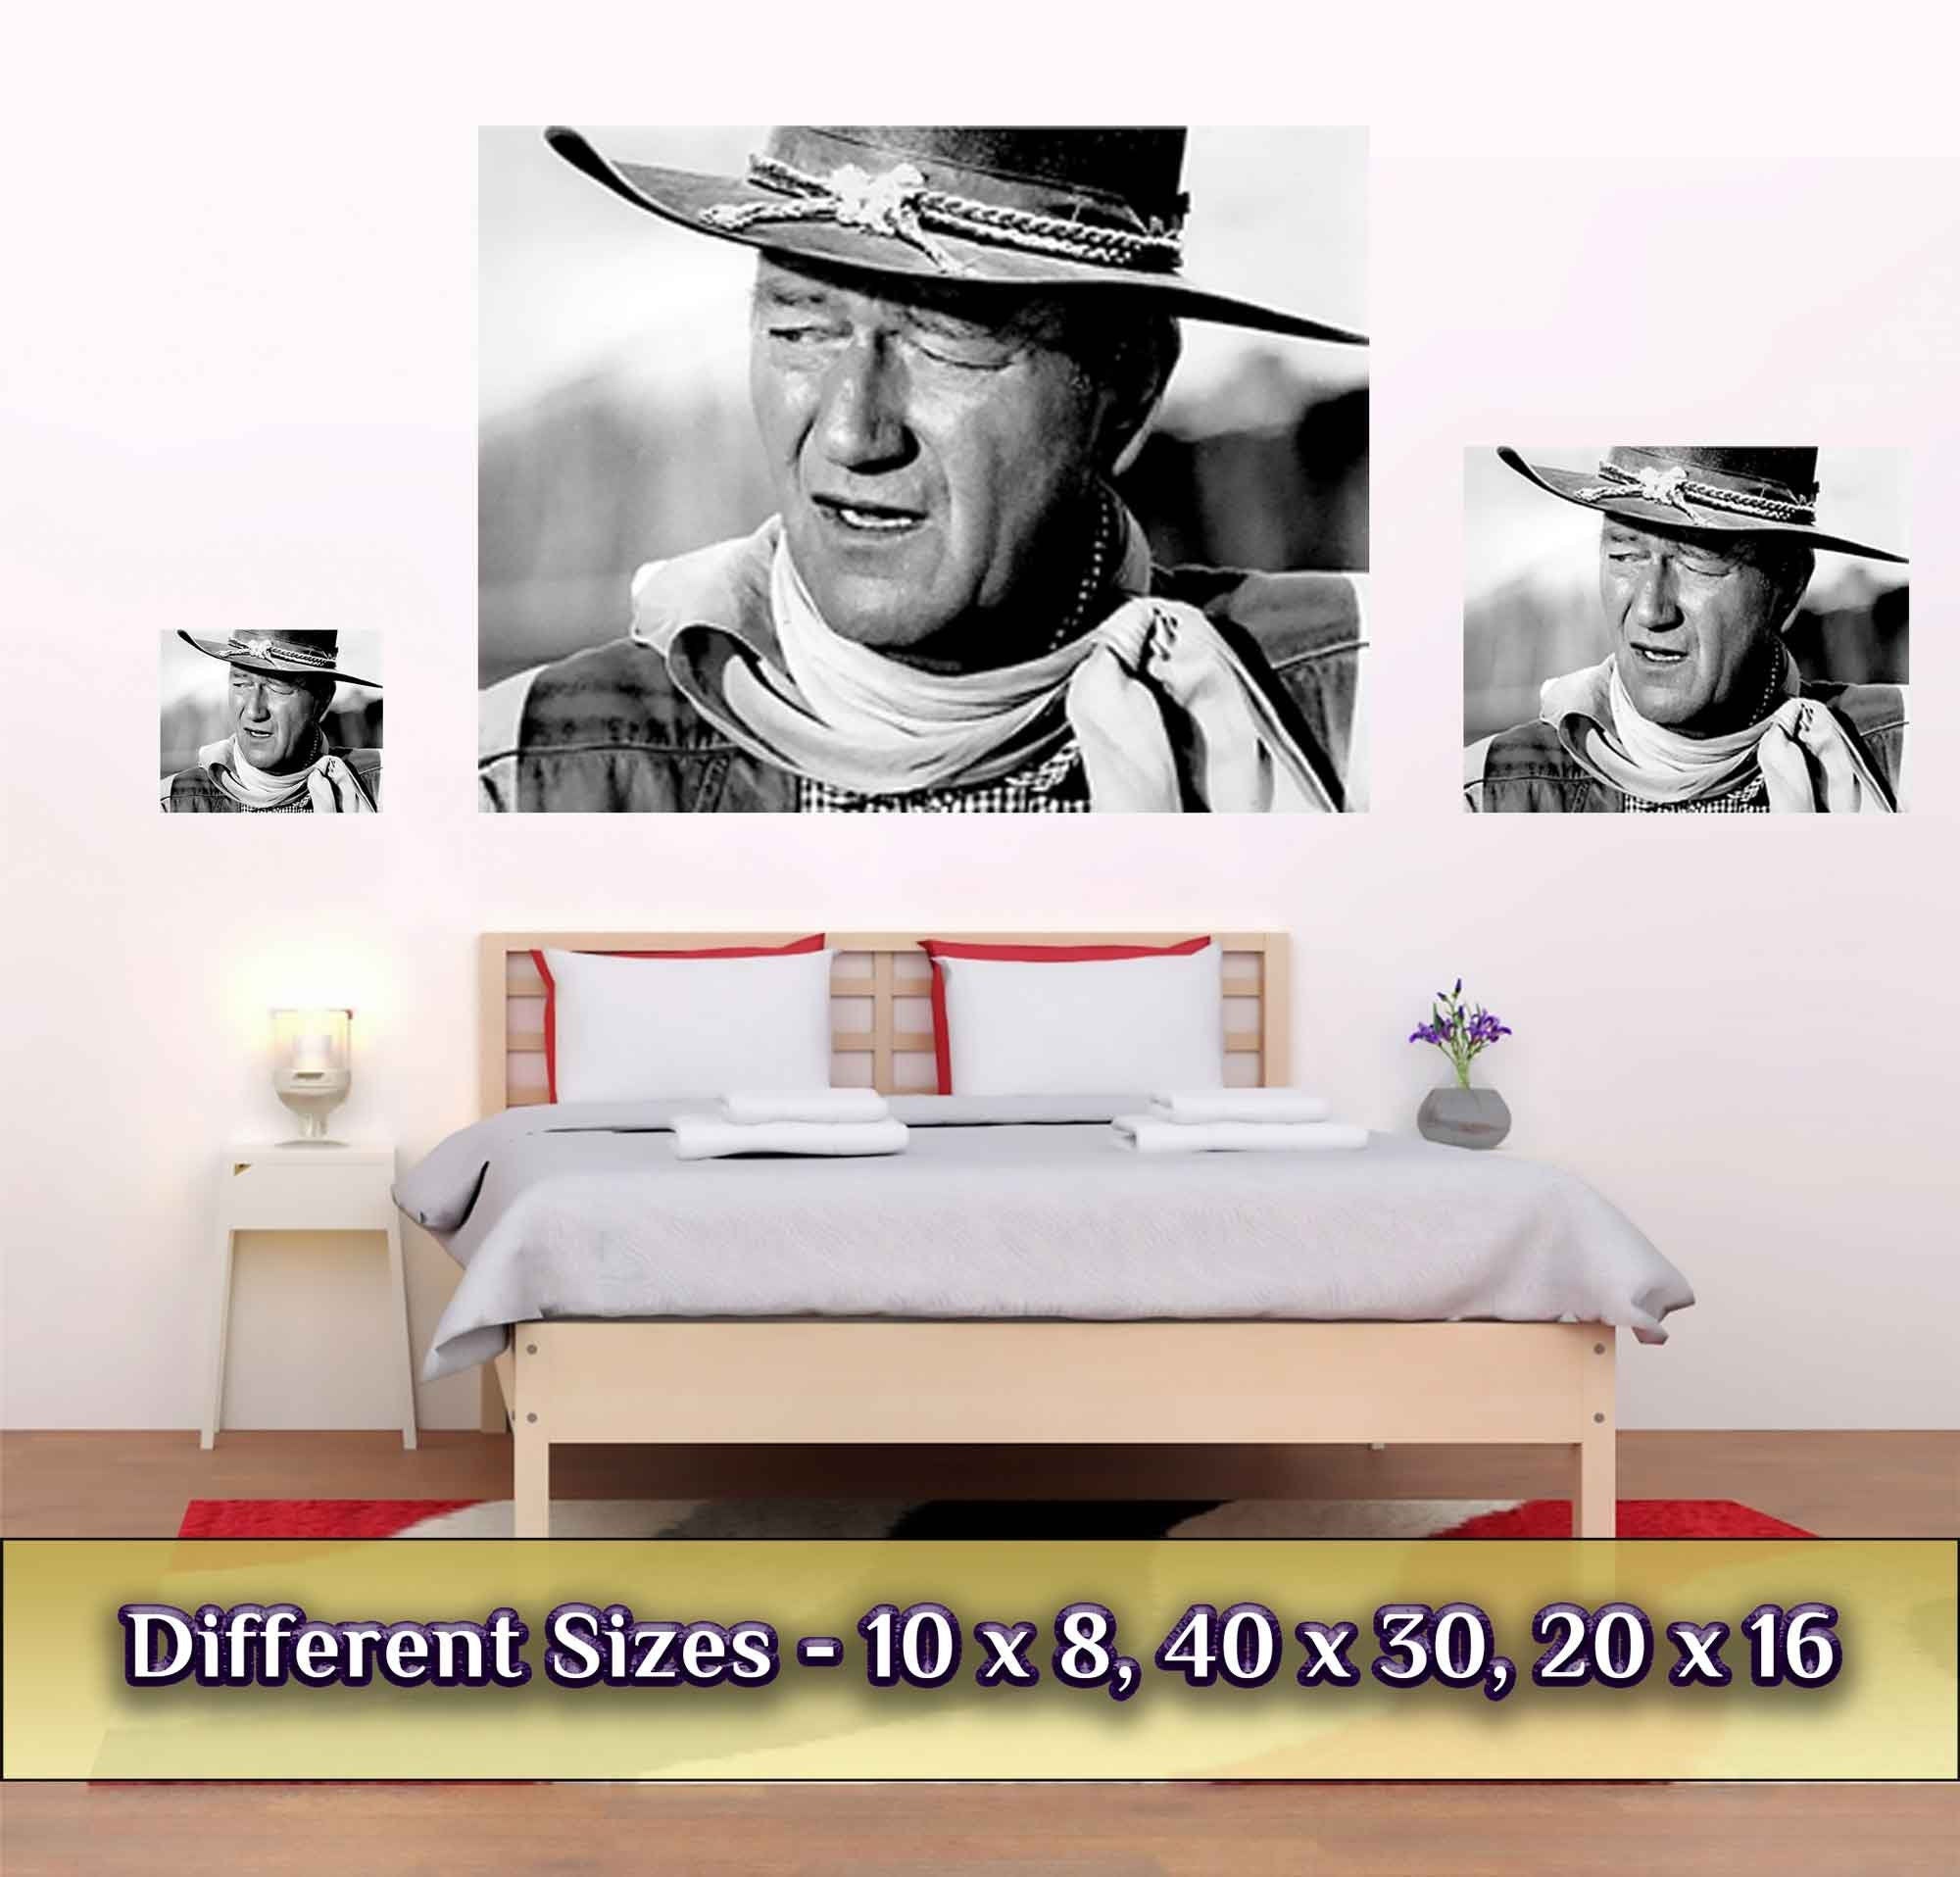 John Wayne Poster, Cowboy Poster 1961, Vintage Photo, John Wayne Print, Hollywood Silver Screen Star - WallArtPrints4U